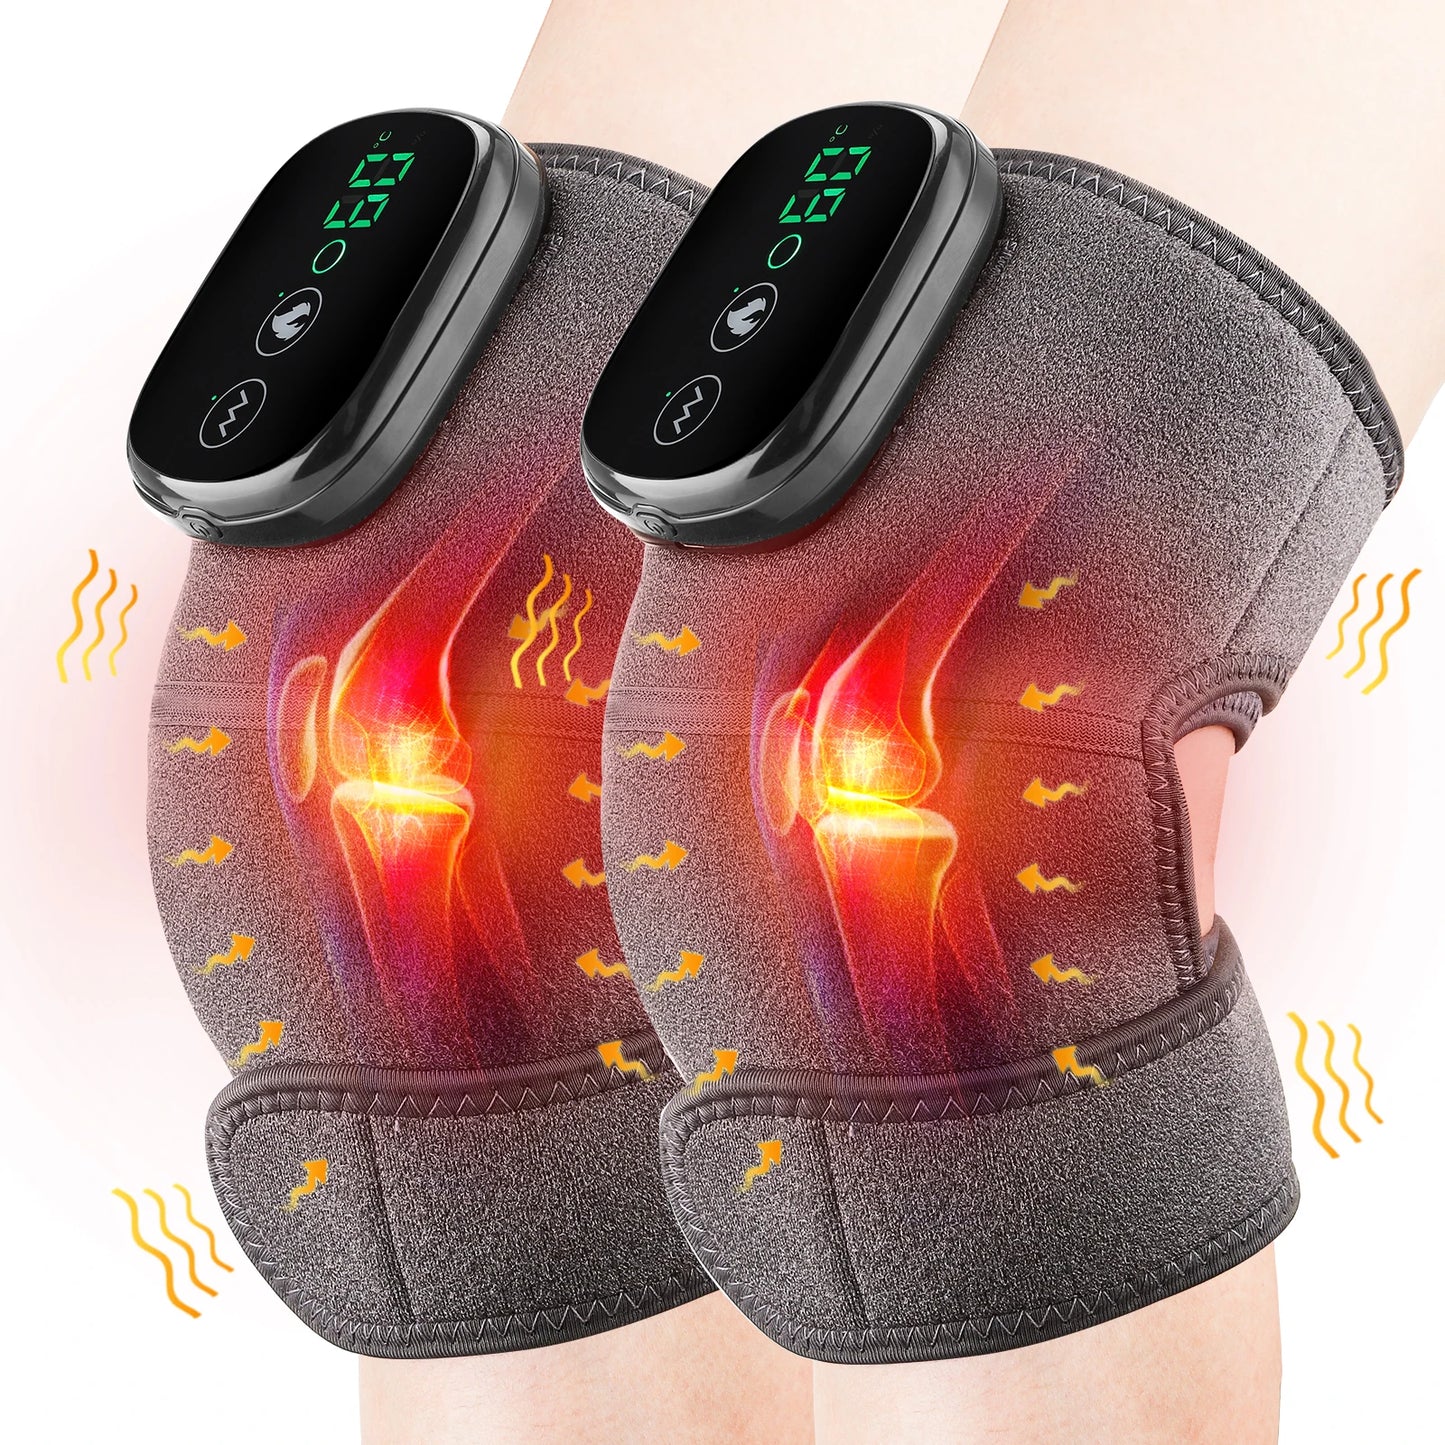 Infrared Knee Massager